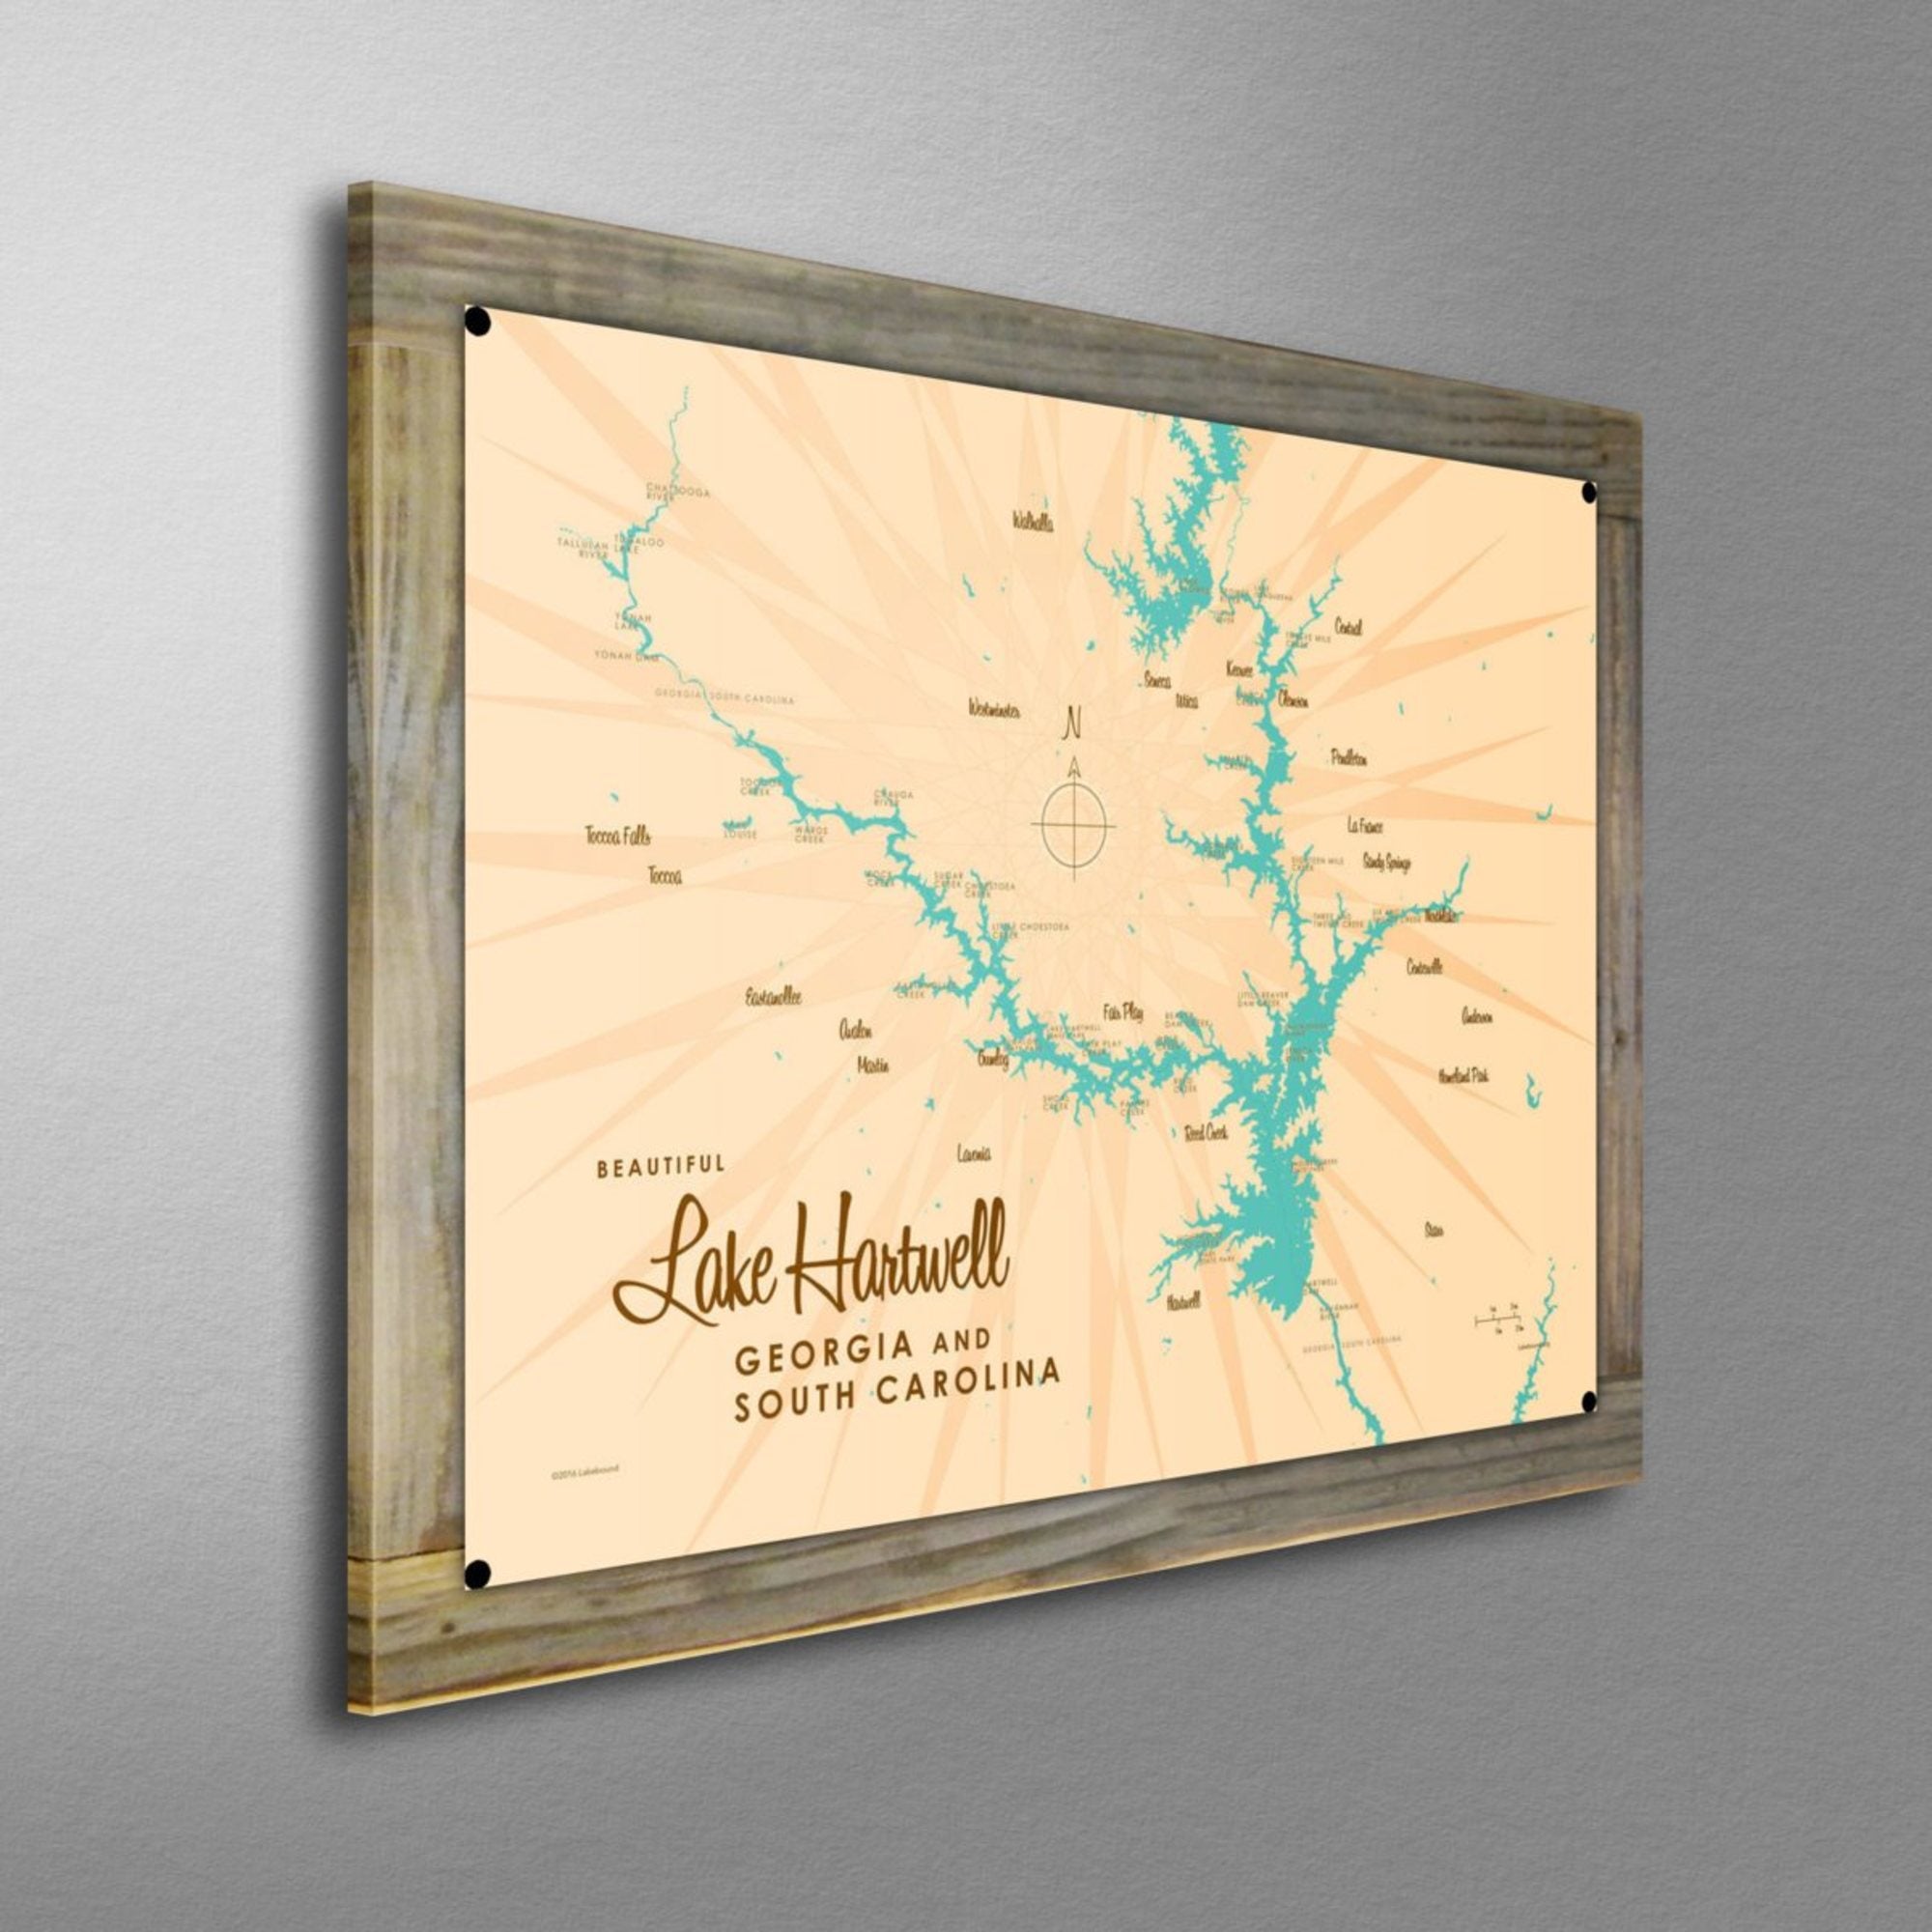 Lake Hartwell Georgia South Carolina, Wood-Mounted Metal Sign Map Art